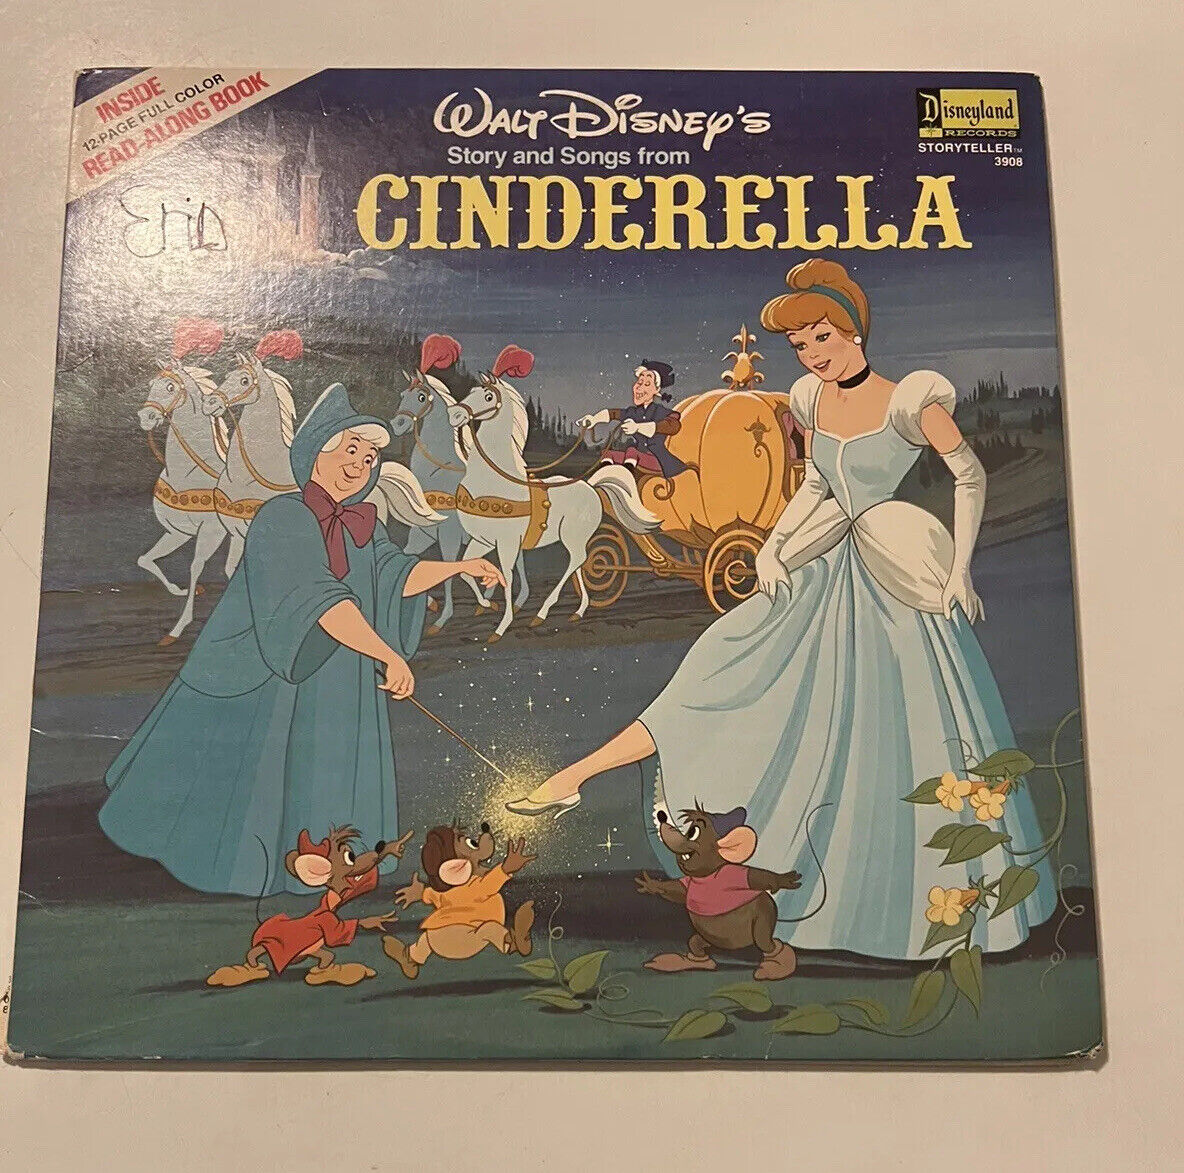 1980 Walt Disney\'s Story And Songs From Cinderella Vinyl Storyteller 3908 Record